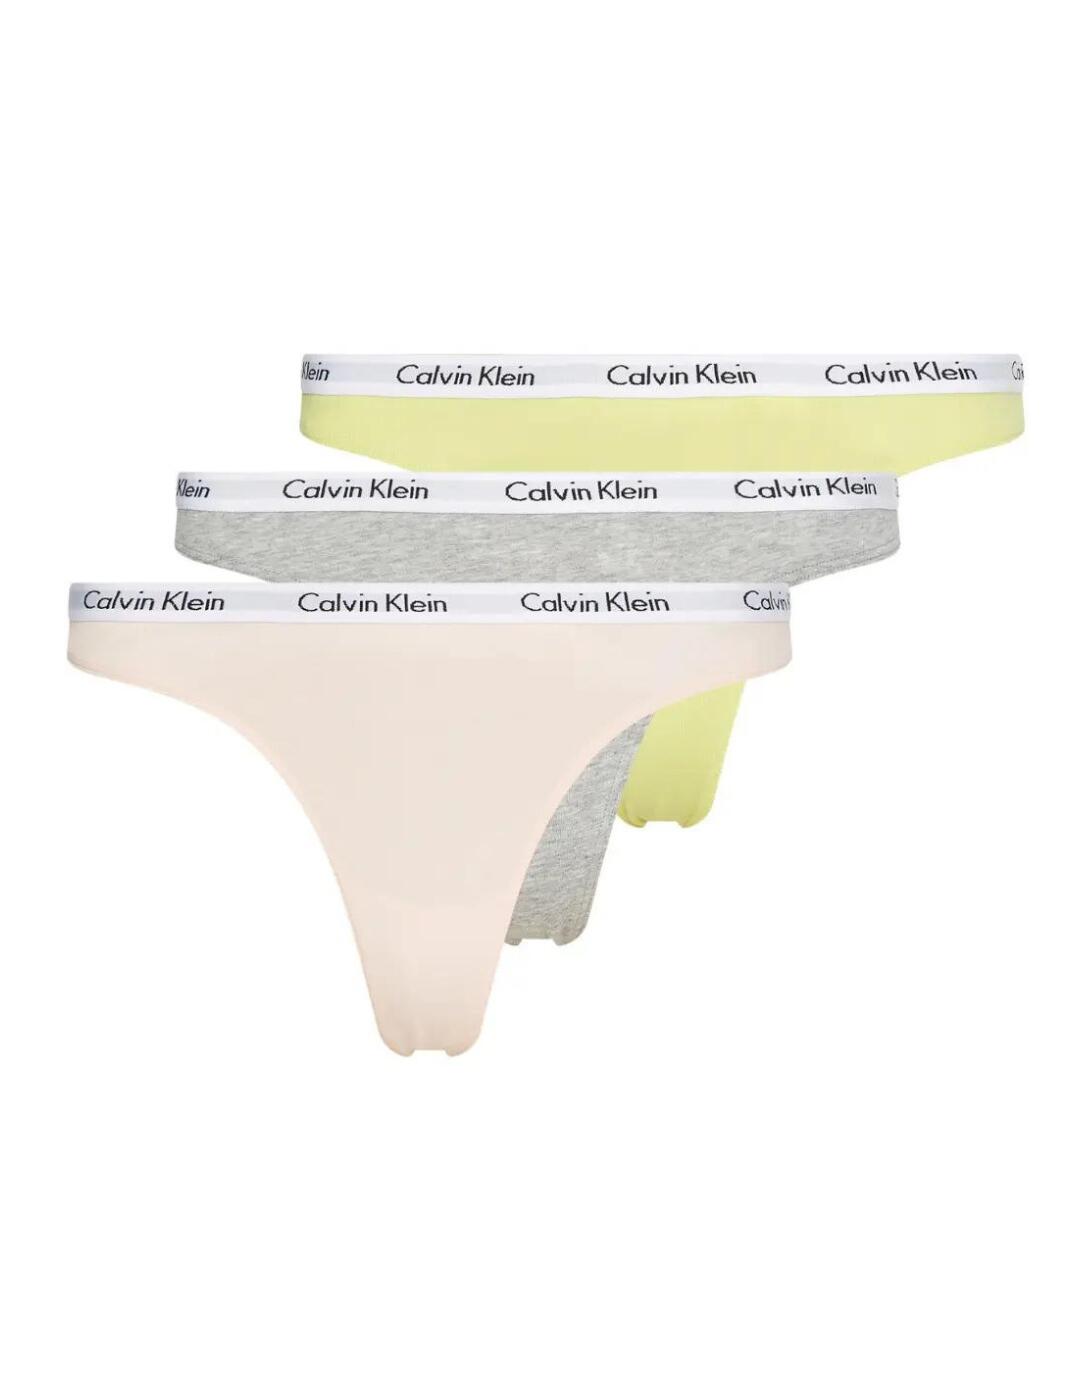 Calvin Klein Underwear Carousel 3-Pack Bikini (Foliage Green